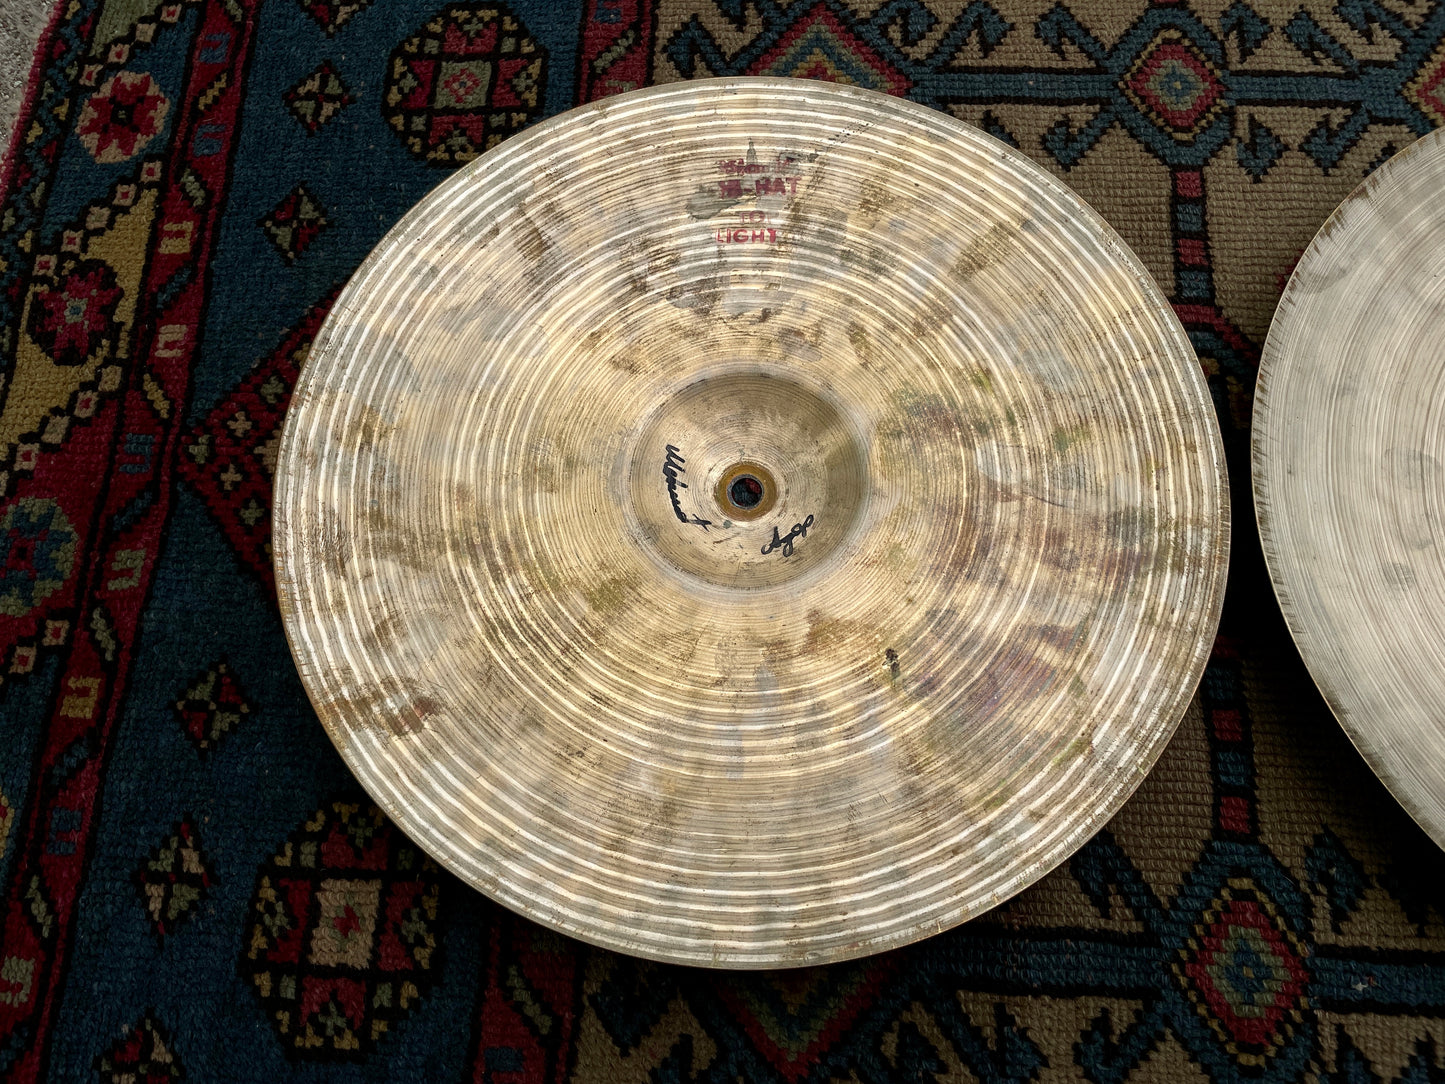 14" Istanbul Pre-Split Green Label Hi-Hat Cymbal Pair 1002g/1044g